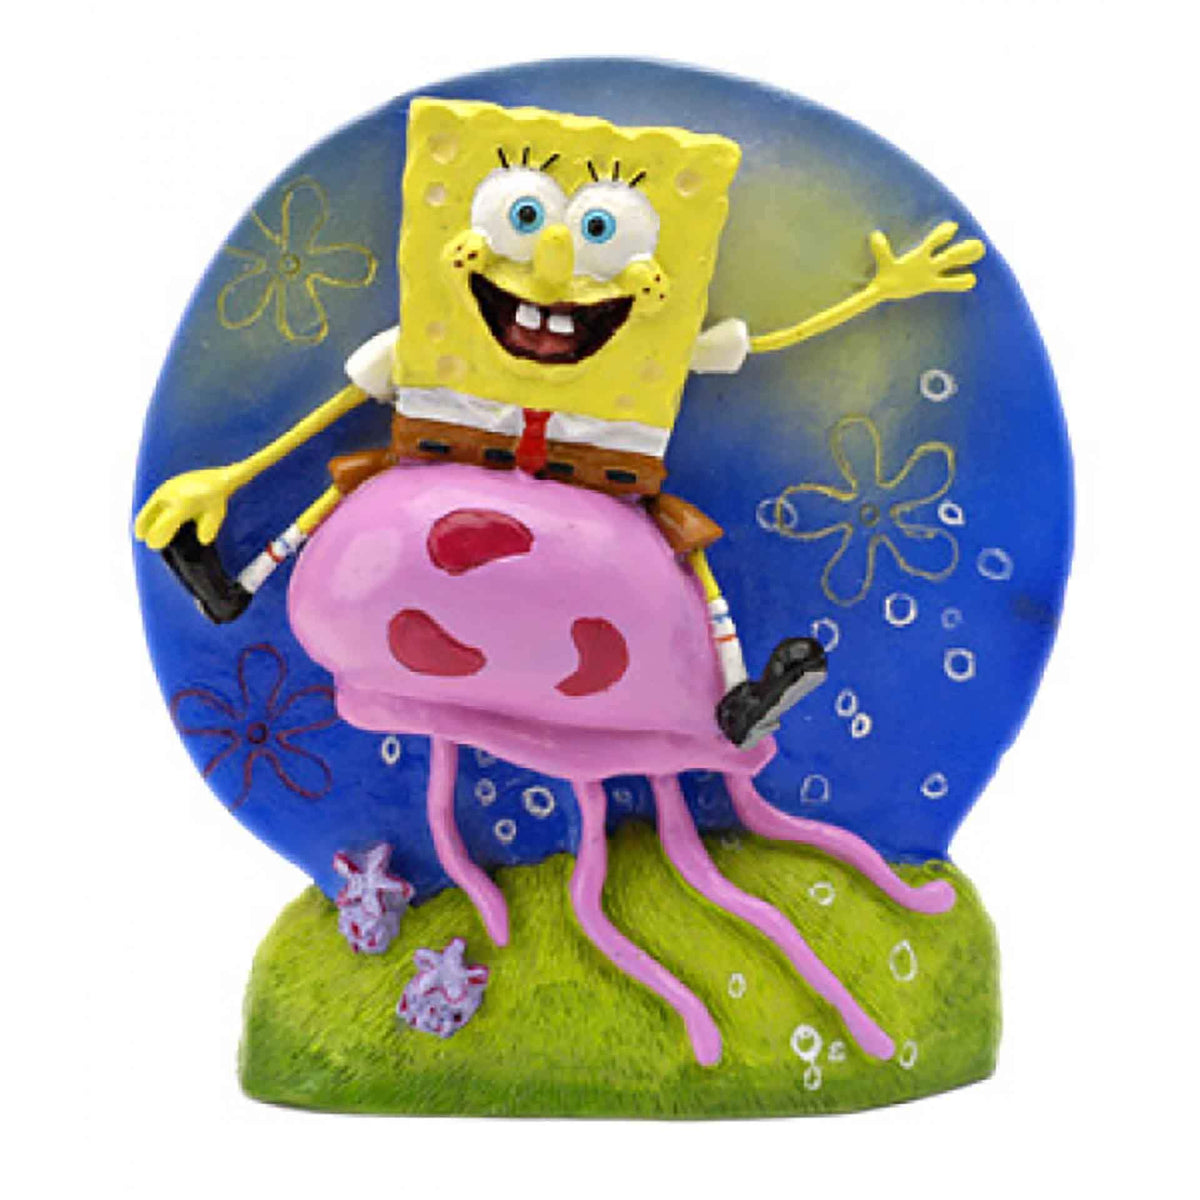 SpongeBob Squarepants on Jellyfish Resin Replica Large Ornament - 7.6cm High